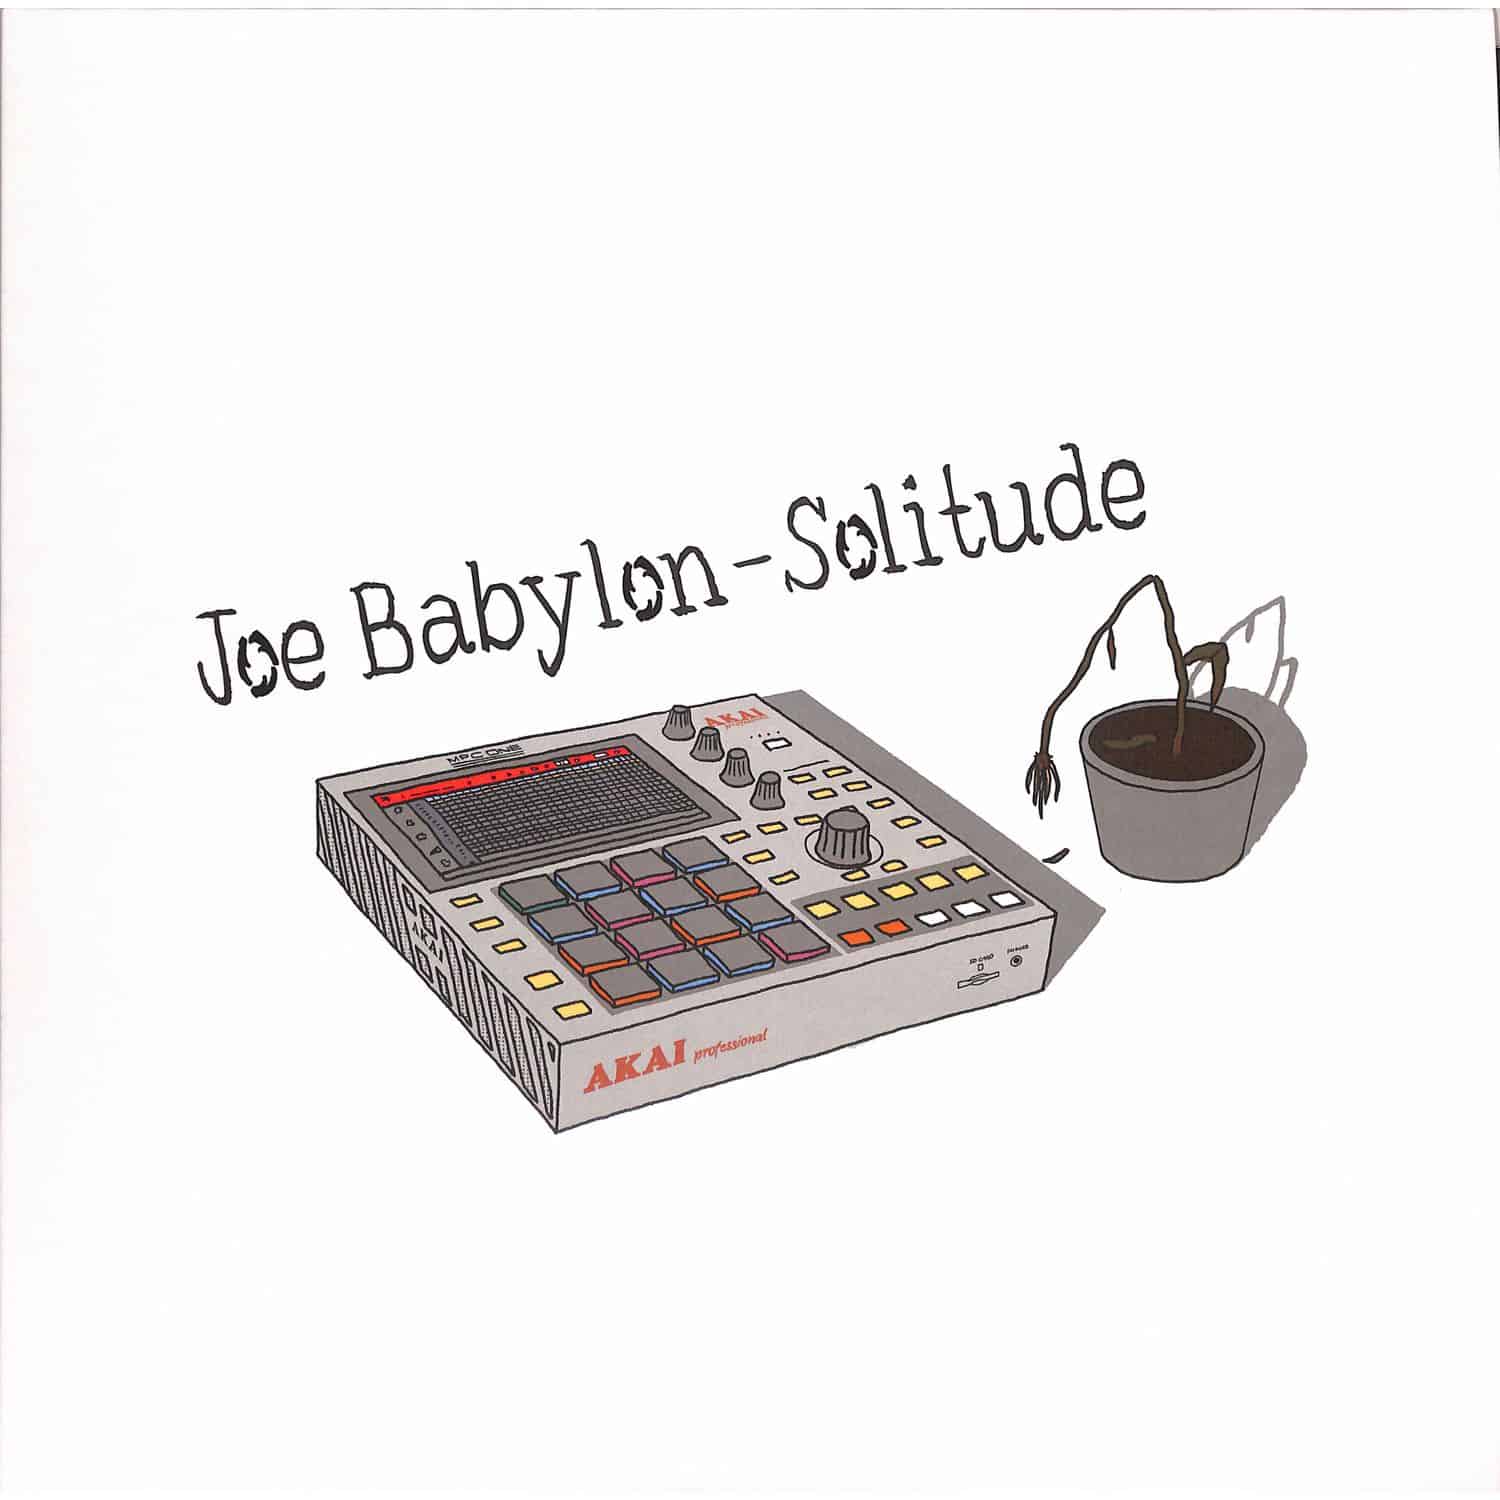 Joe Babylon - SOLITUDE 